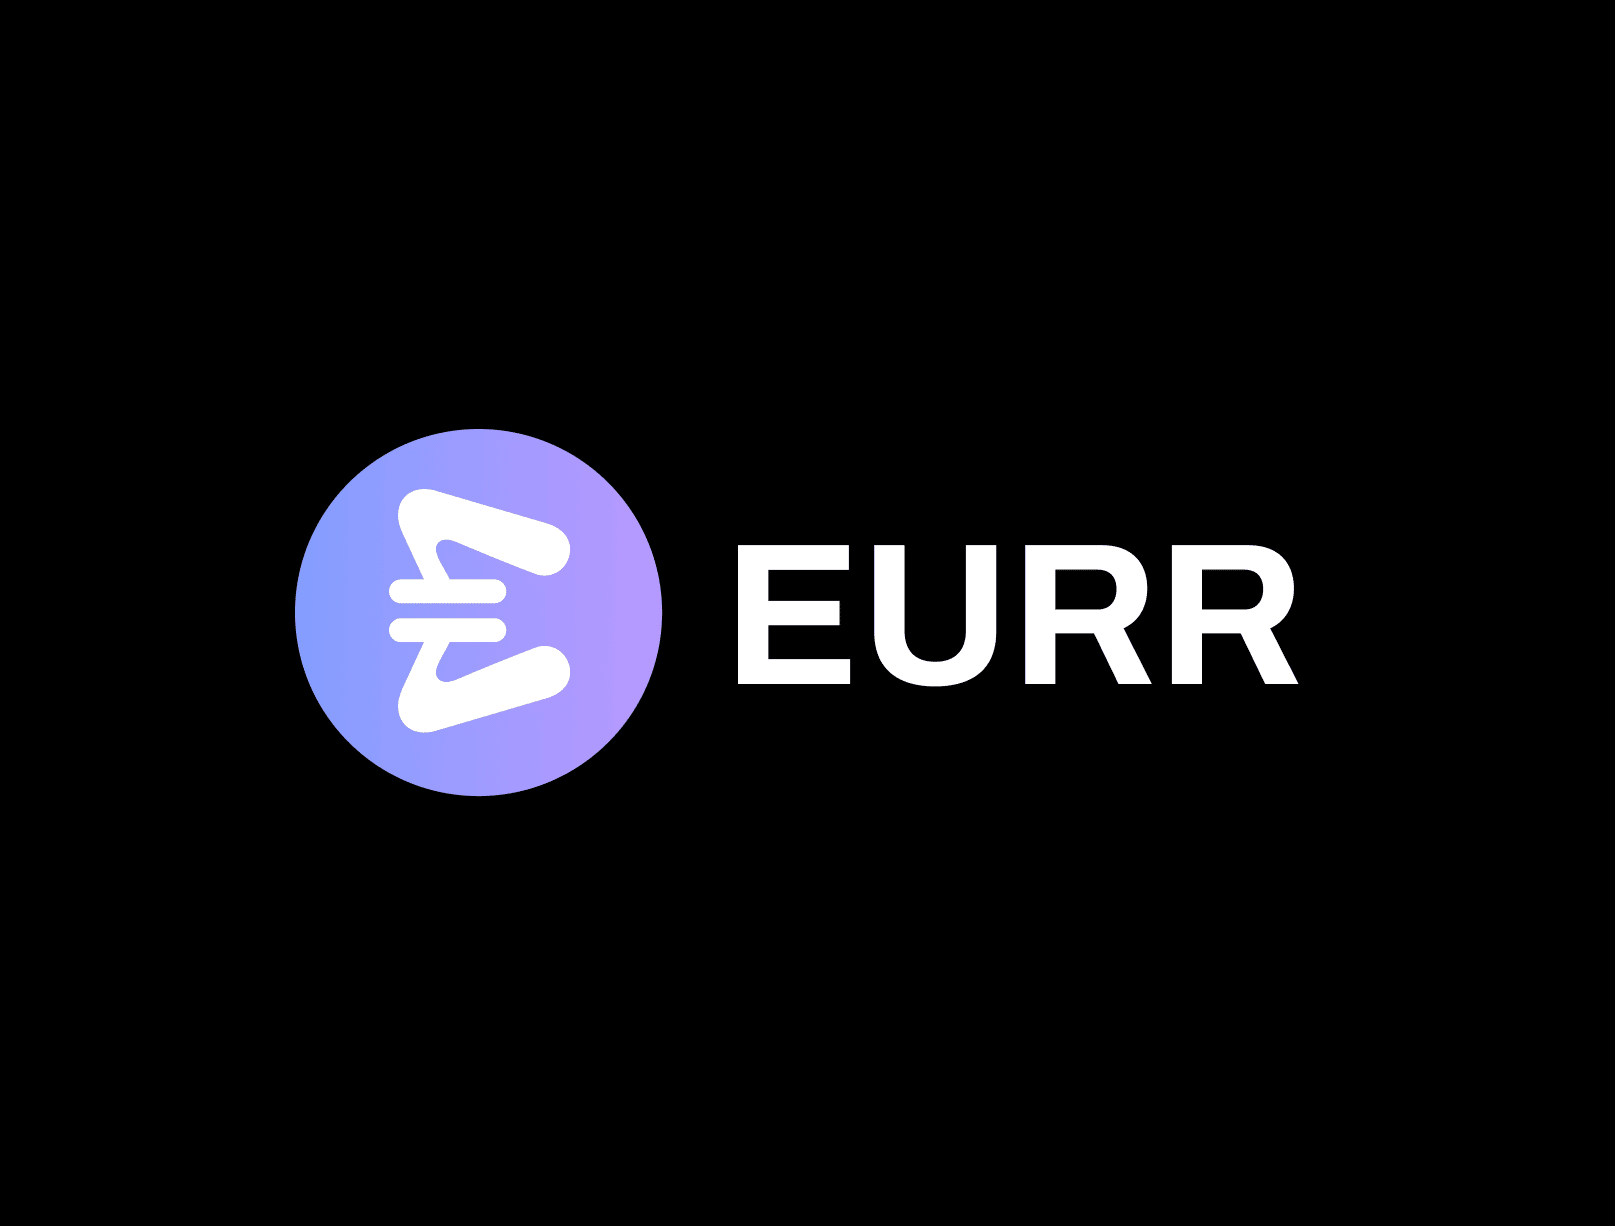 EURR Logo Black background